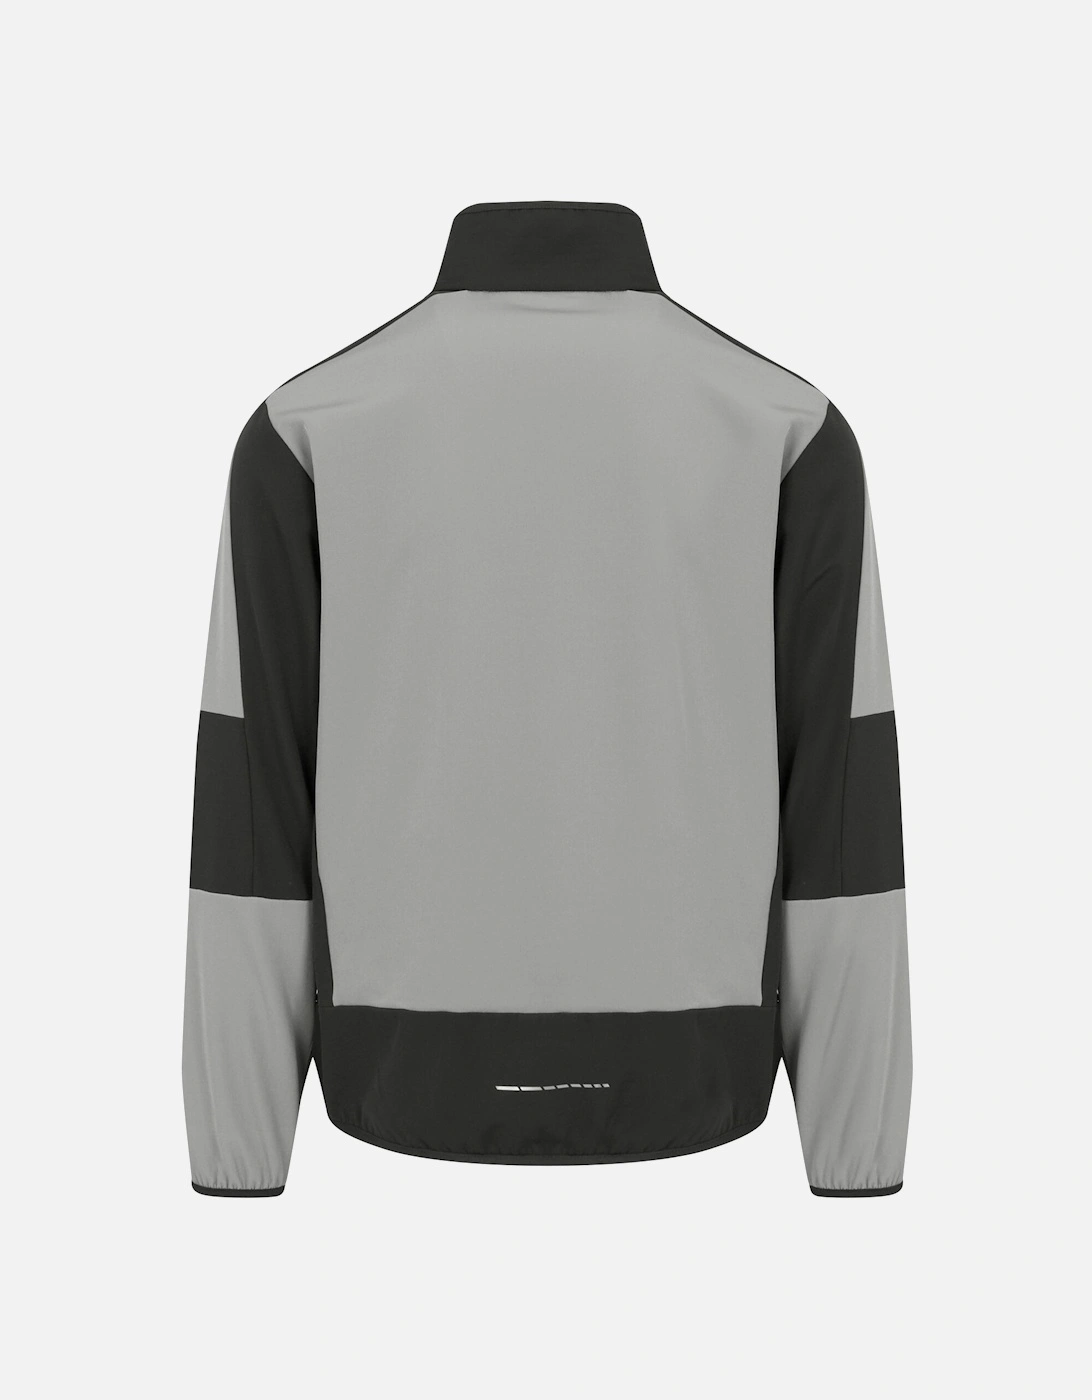 Unisex Adult E-Volve 2 Layer Soft Shell Jacket